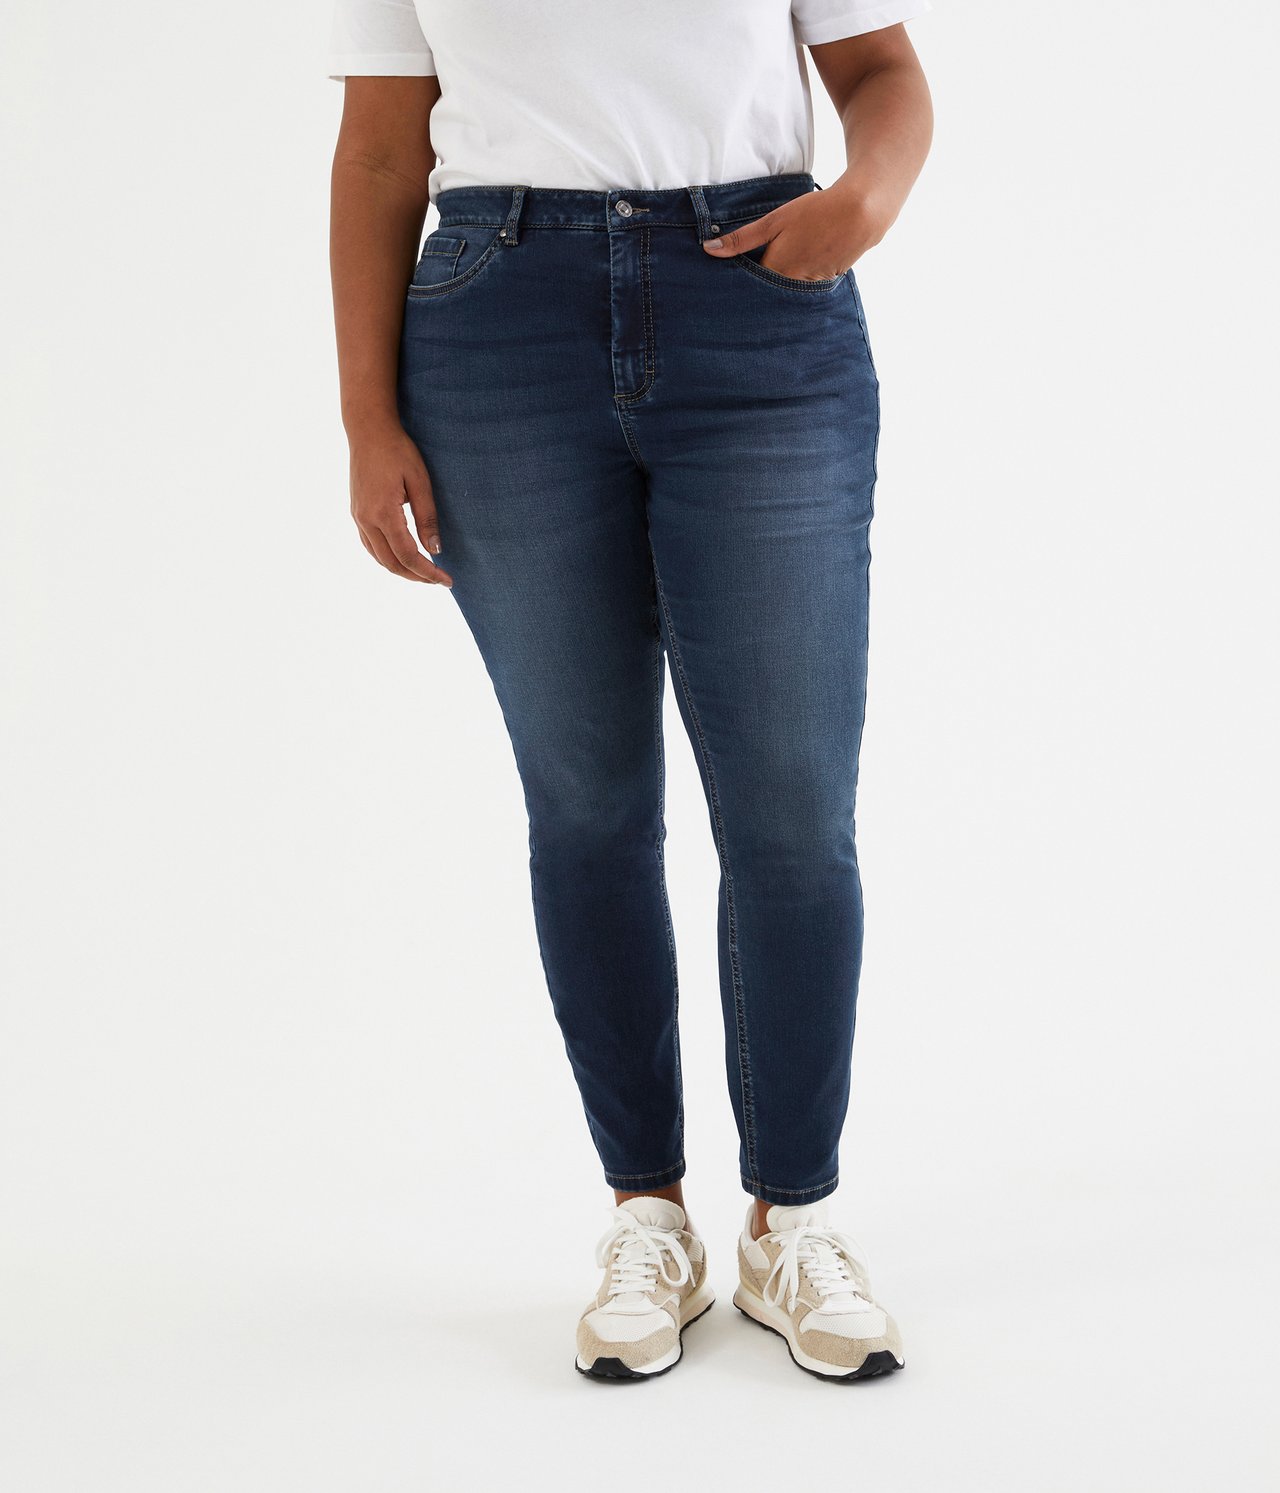 Ebba slim jeans - Tumma denimi - 182cm / Storlek: 50 - 3